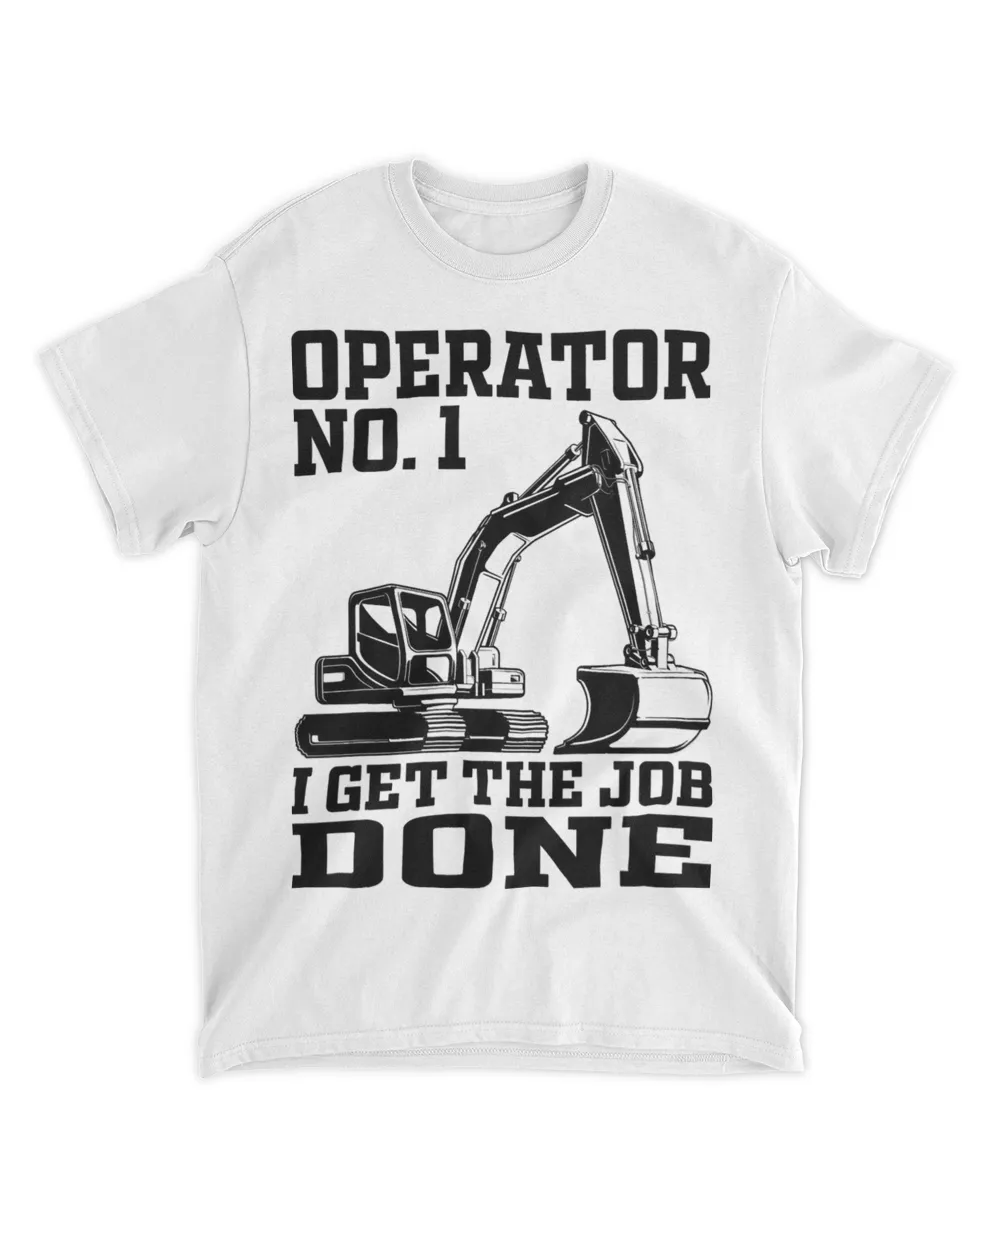 Operator No. 1 2I Get The Job Done 2Excavator Construction 21